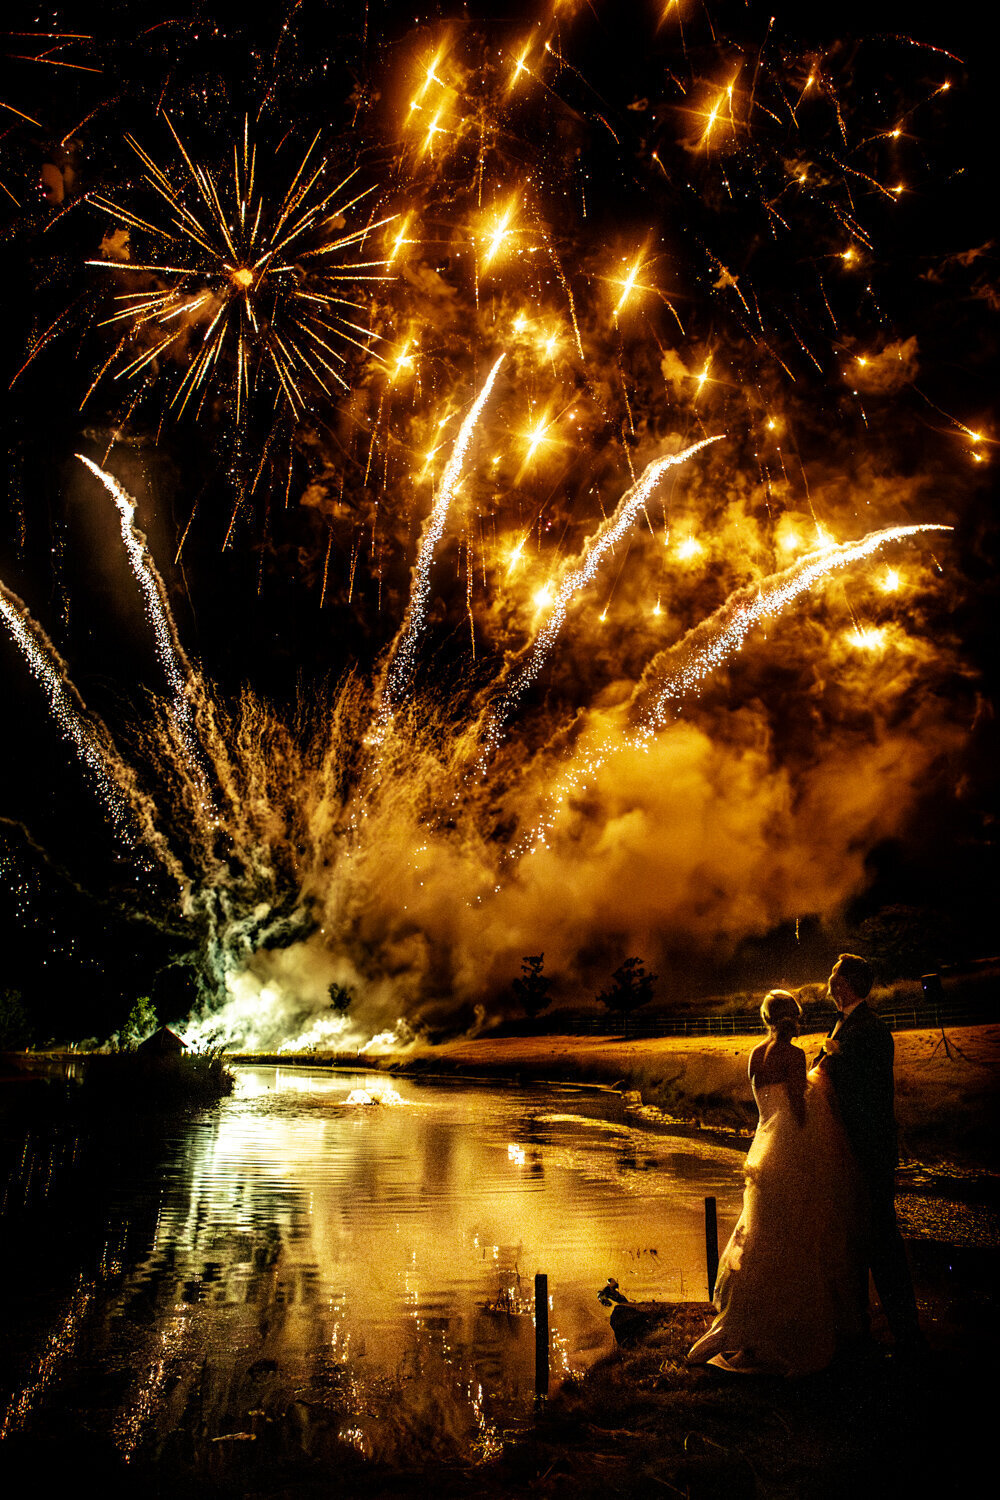 wedding couple watching fireworks